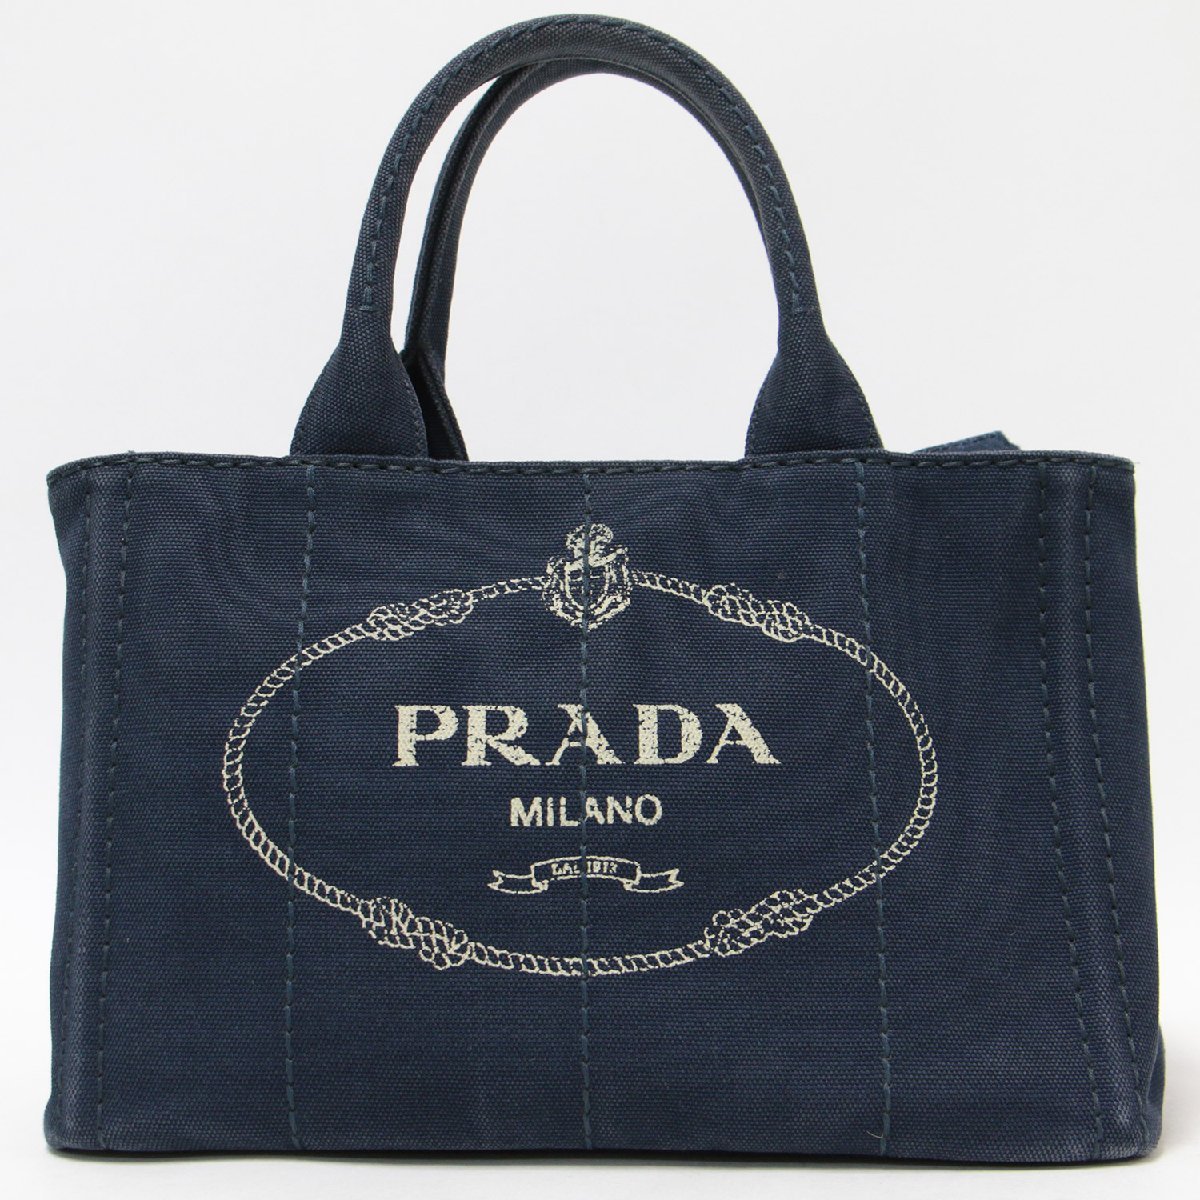 PRADA プラダ バッグ トートバッグ ショルダー 鞄 カバン ネイビー 紺